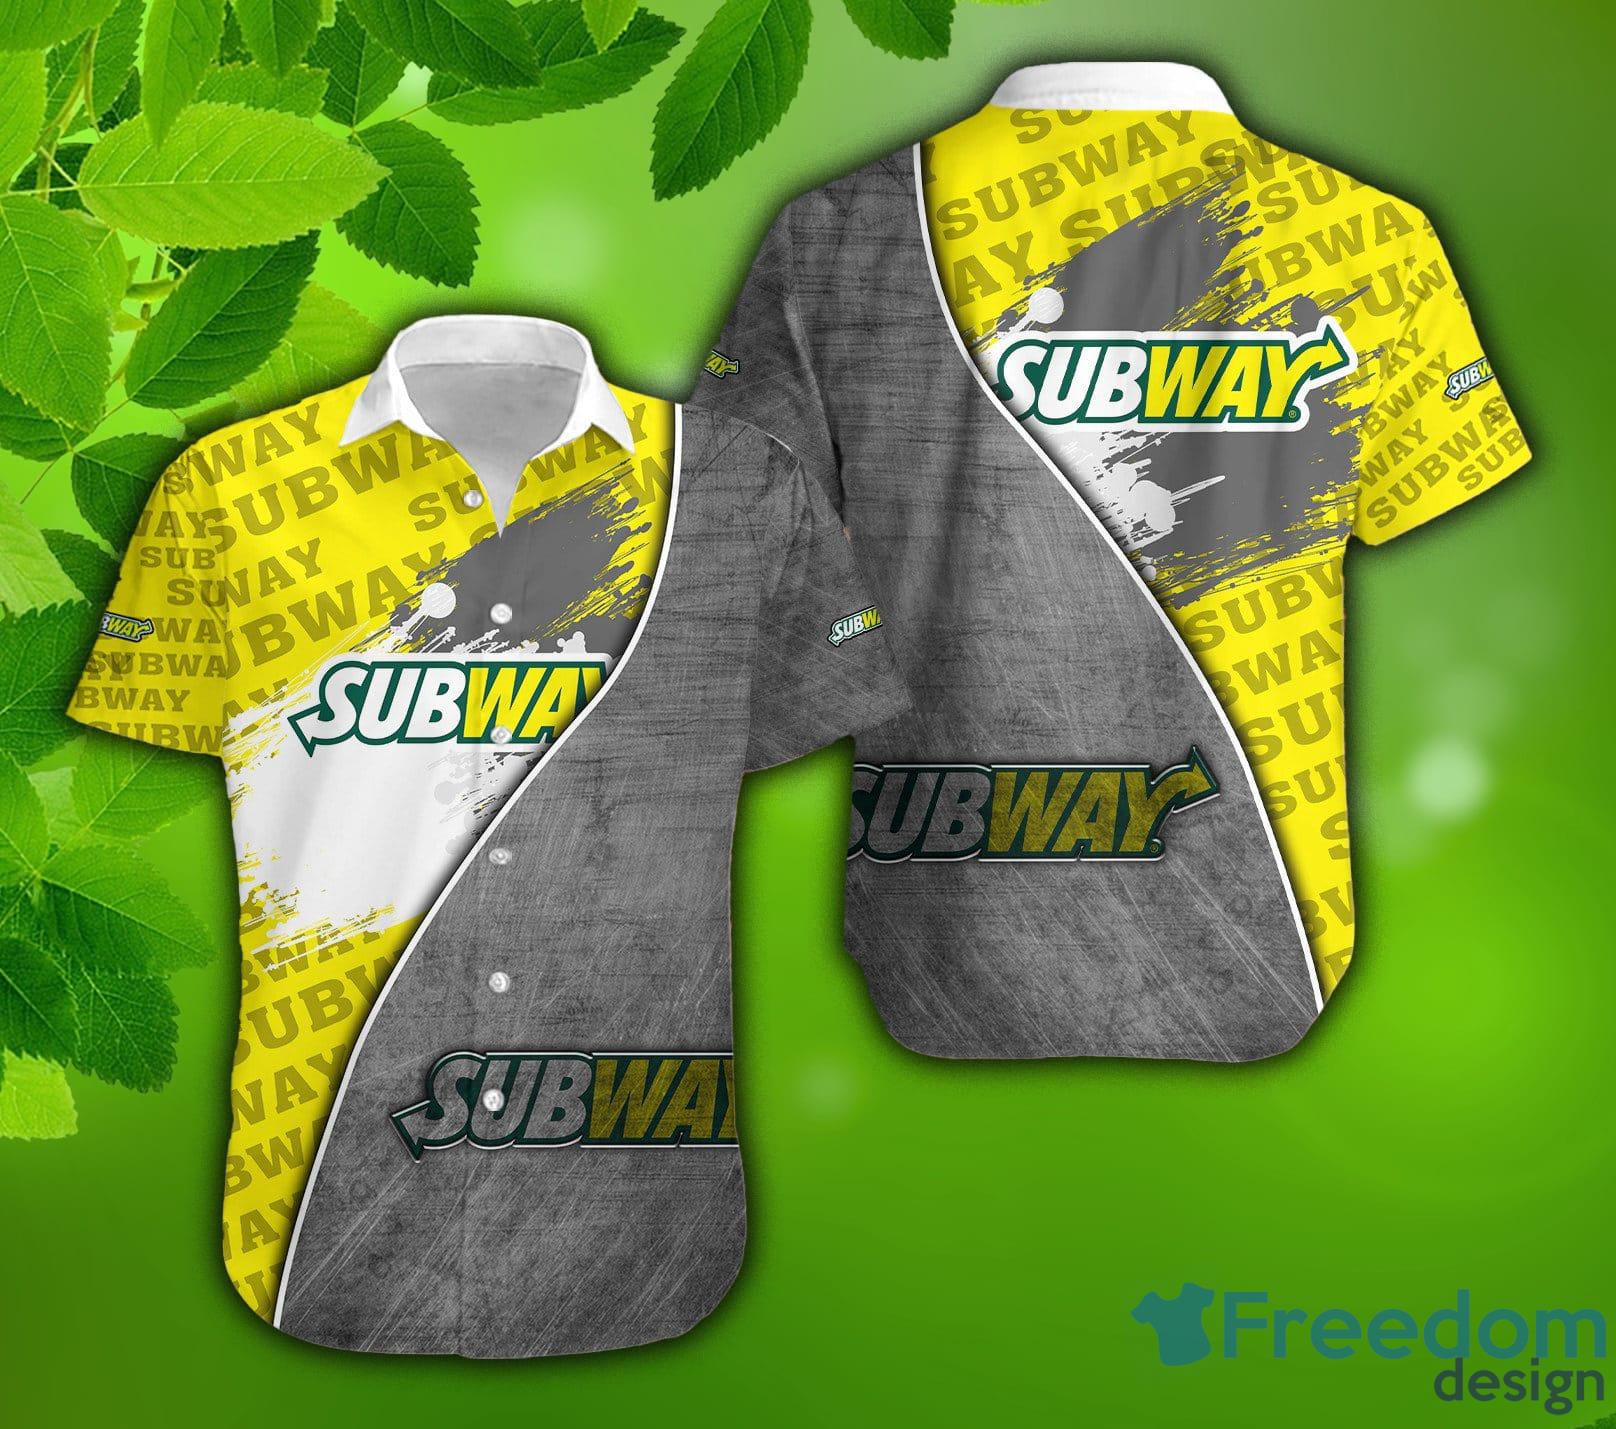 Subway 3D T-Shirt For Men And Women Cute Gift Custom Name